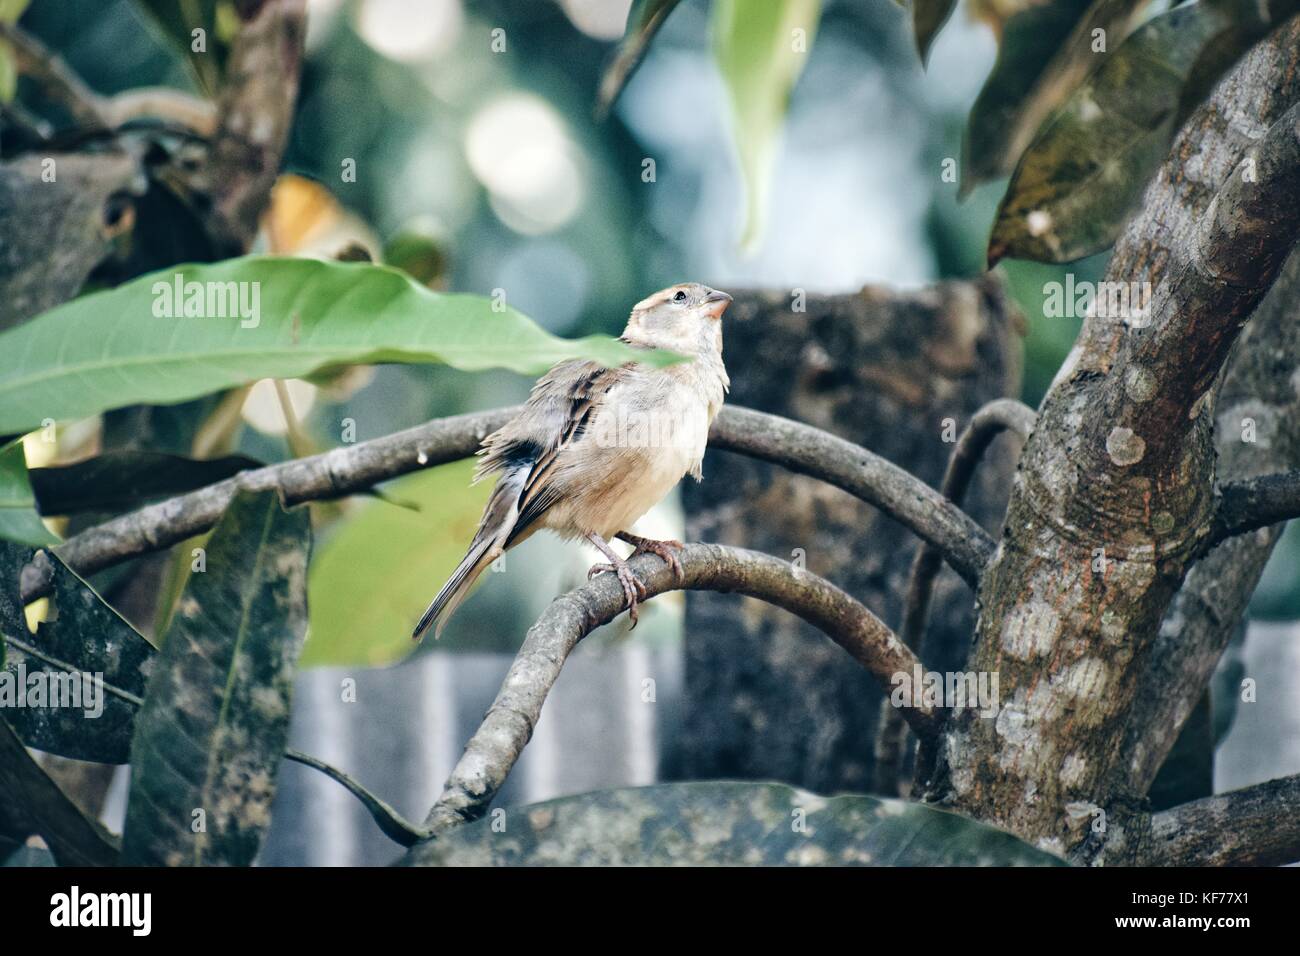 The Sparrow. Stock Photo